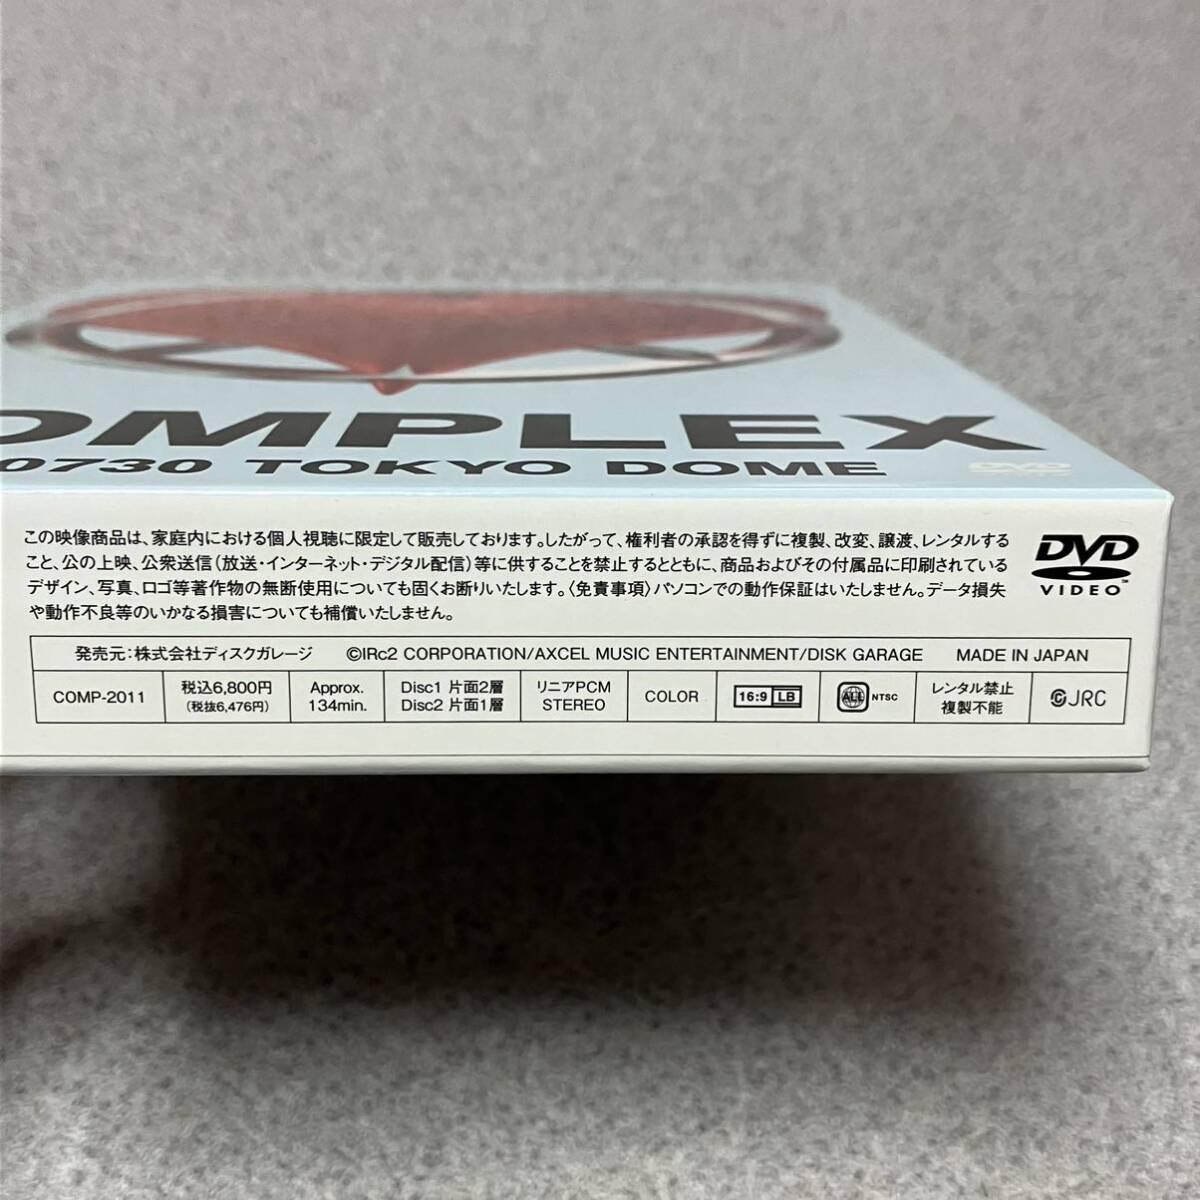 COMPLEX 20110730 TOKYO DOME DVD 日本一心 コンプレックス 吉川晃司 布袋寅泰_画像3